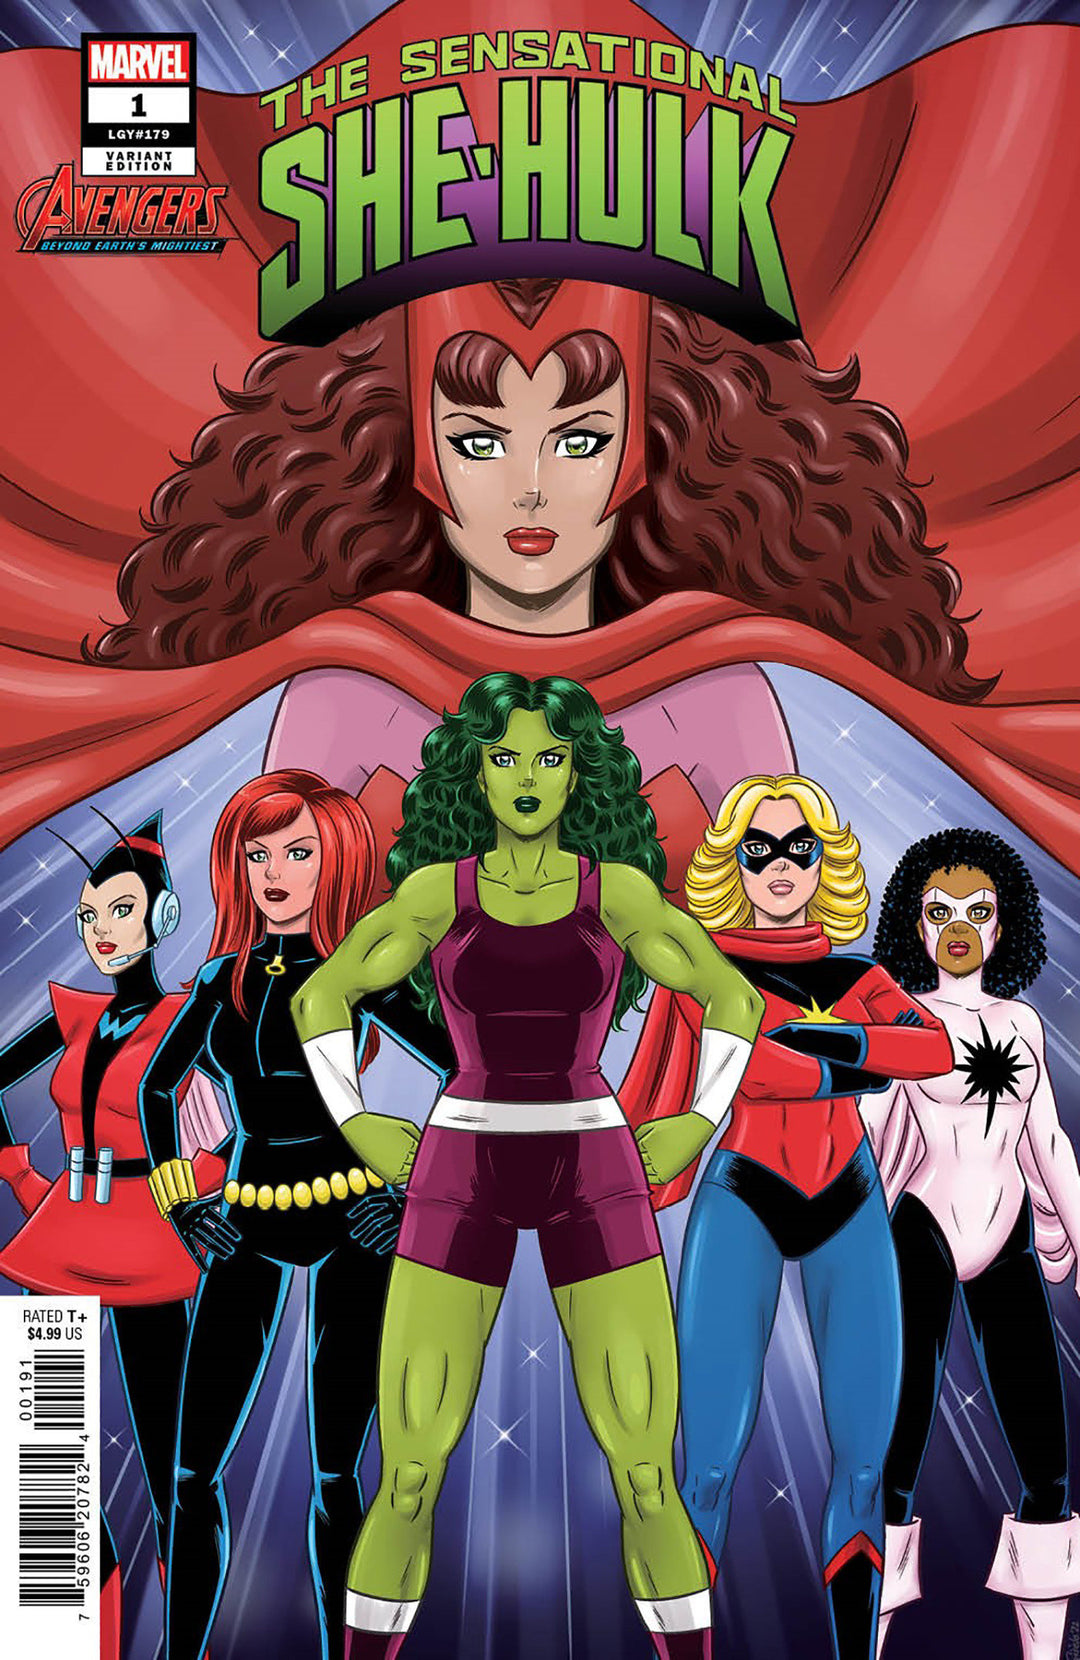 She-Hulk Gets a Sensational New Marvel Comics Series